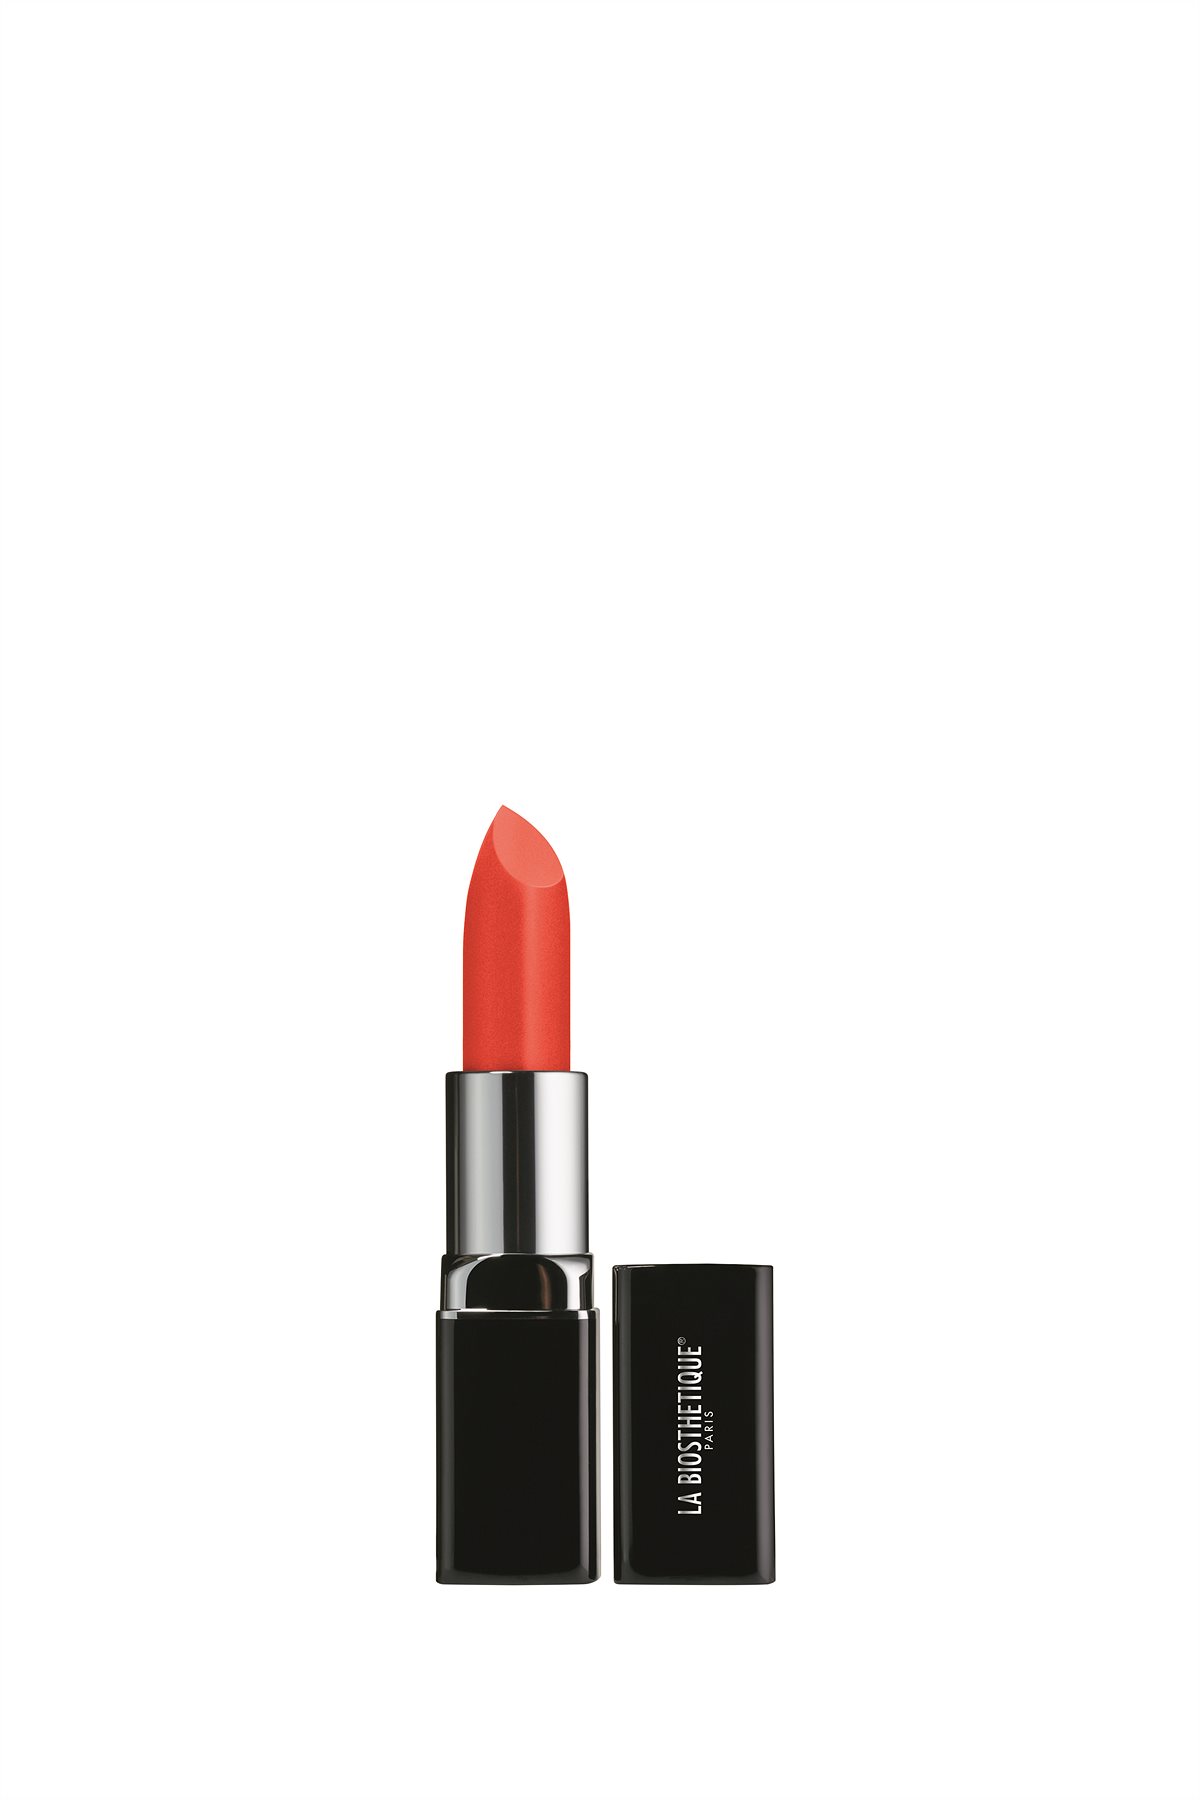 La Biosthétique_sensual lipstick_glossy_bitter_orange_EUR 23,50